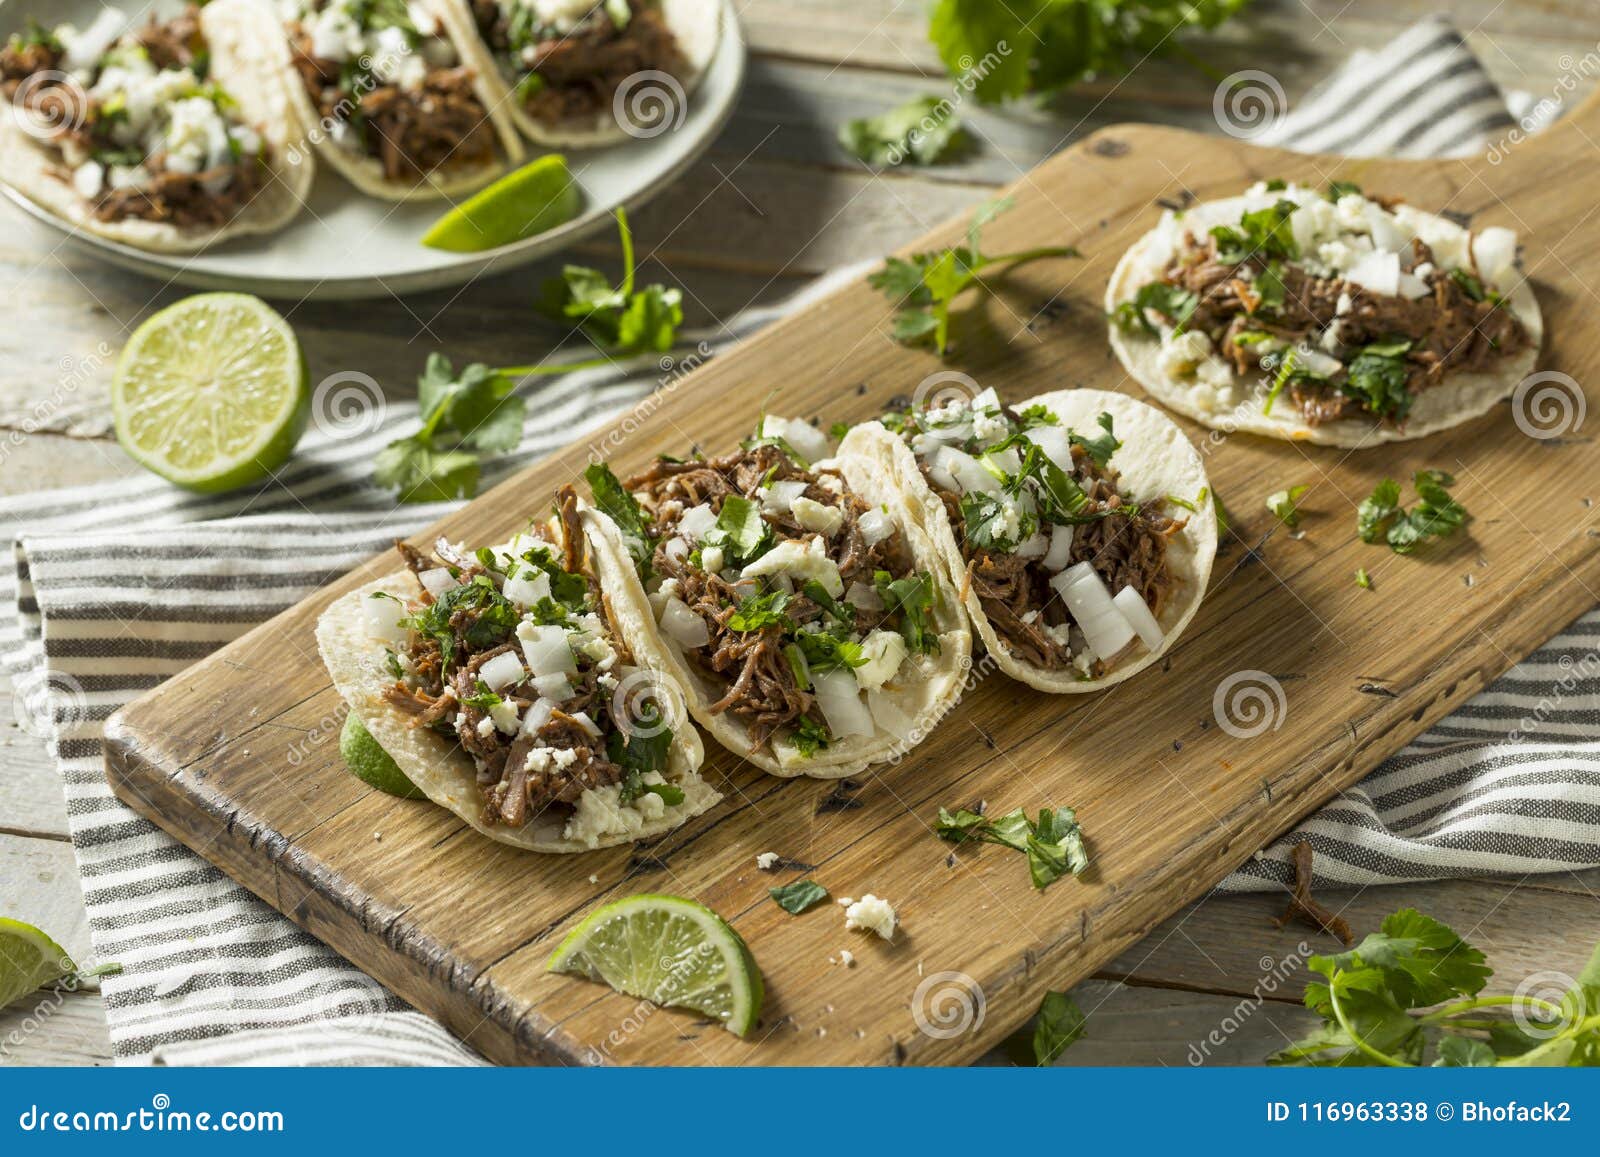 spicy homemade beef barbacoa tacos